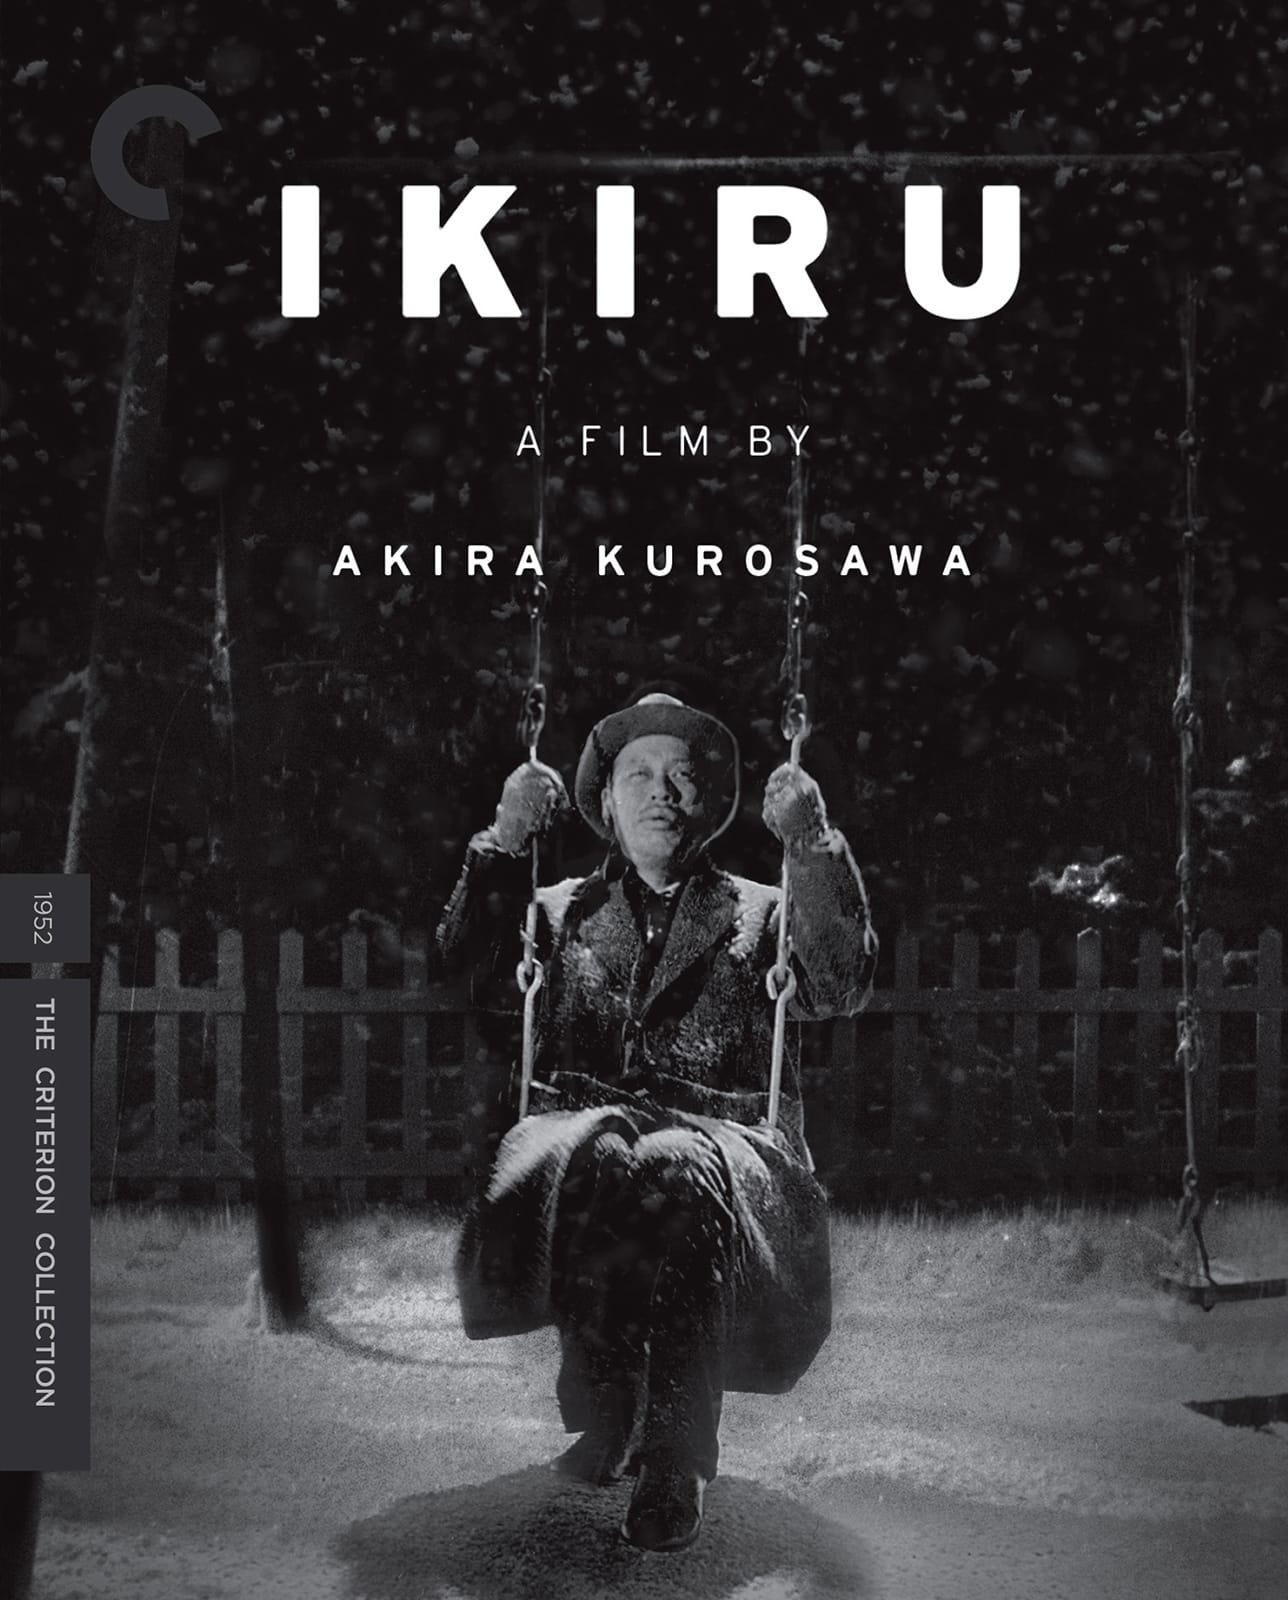 Ikiru (1952) | The Criterion Collection